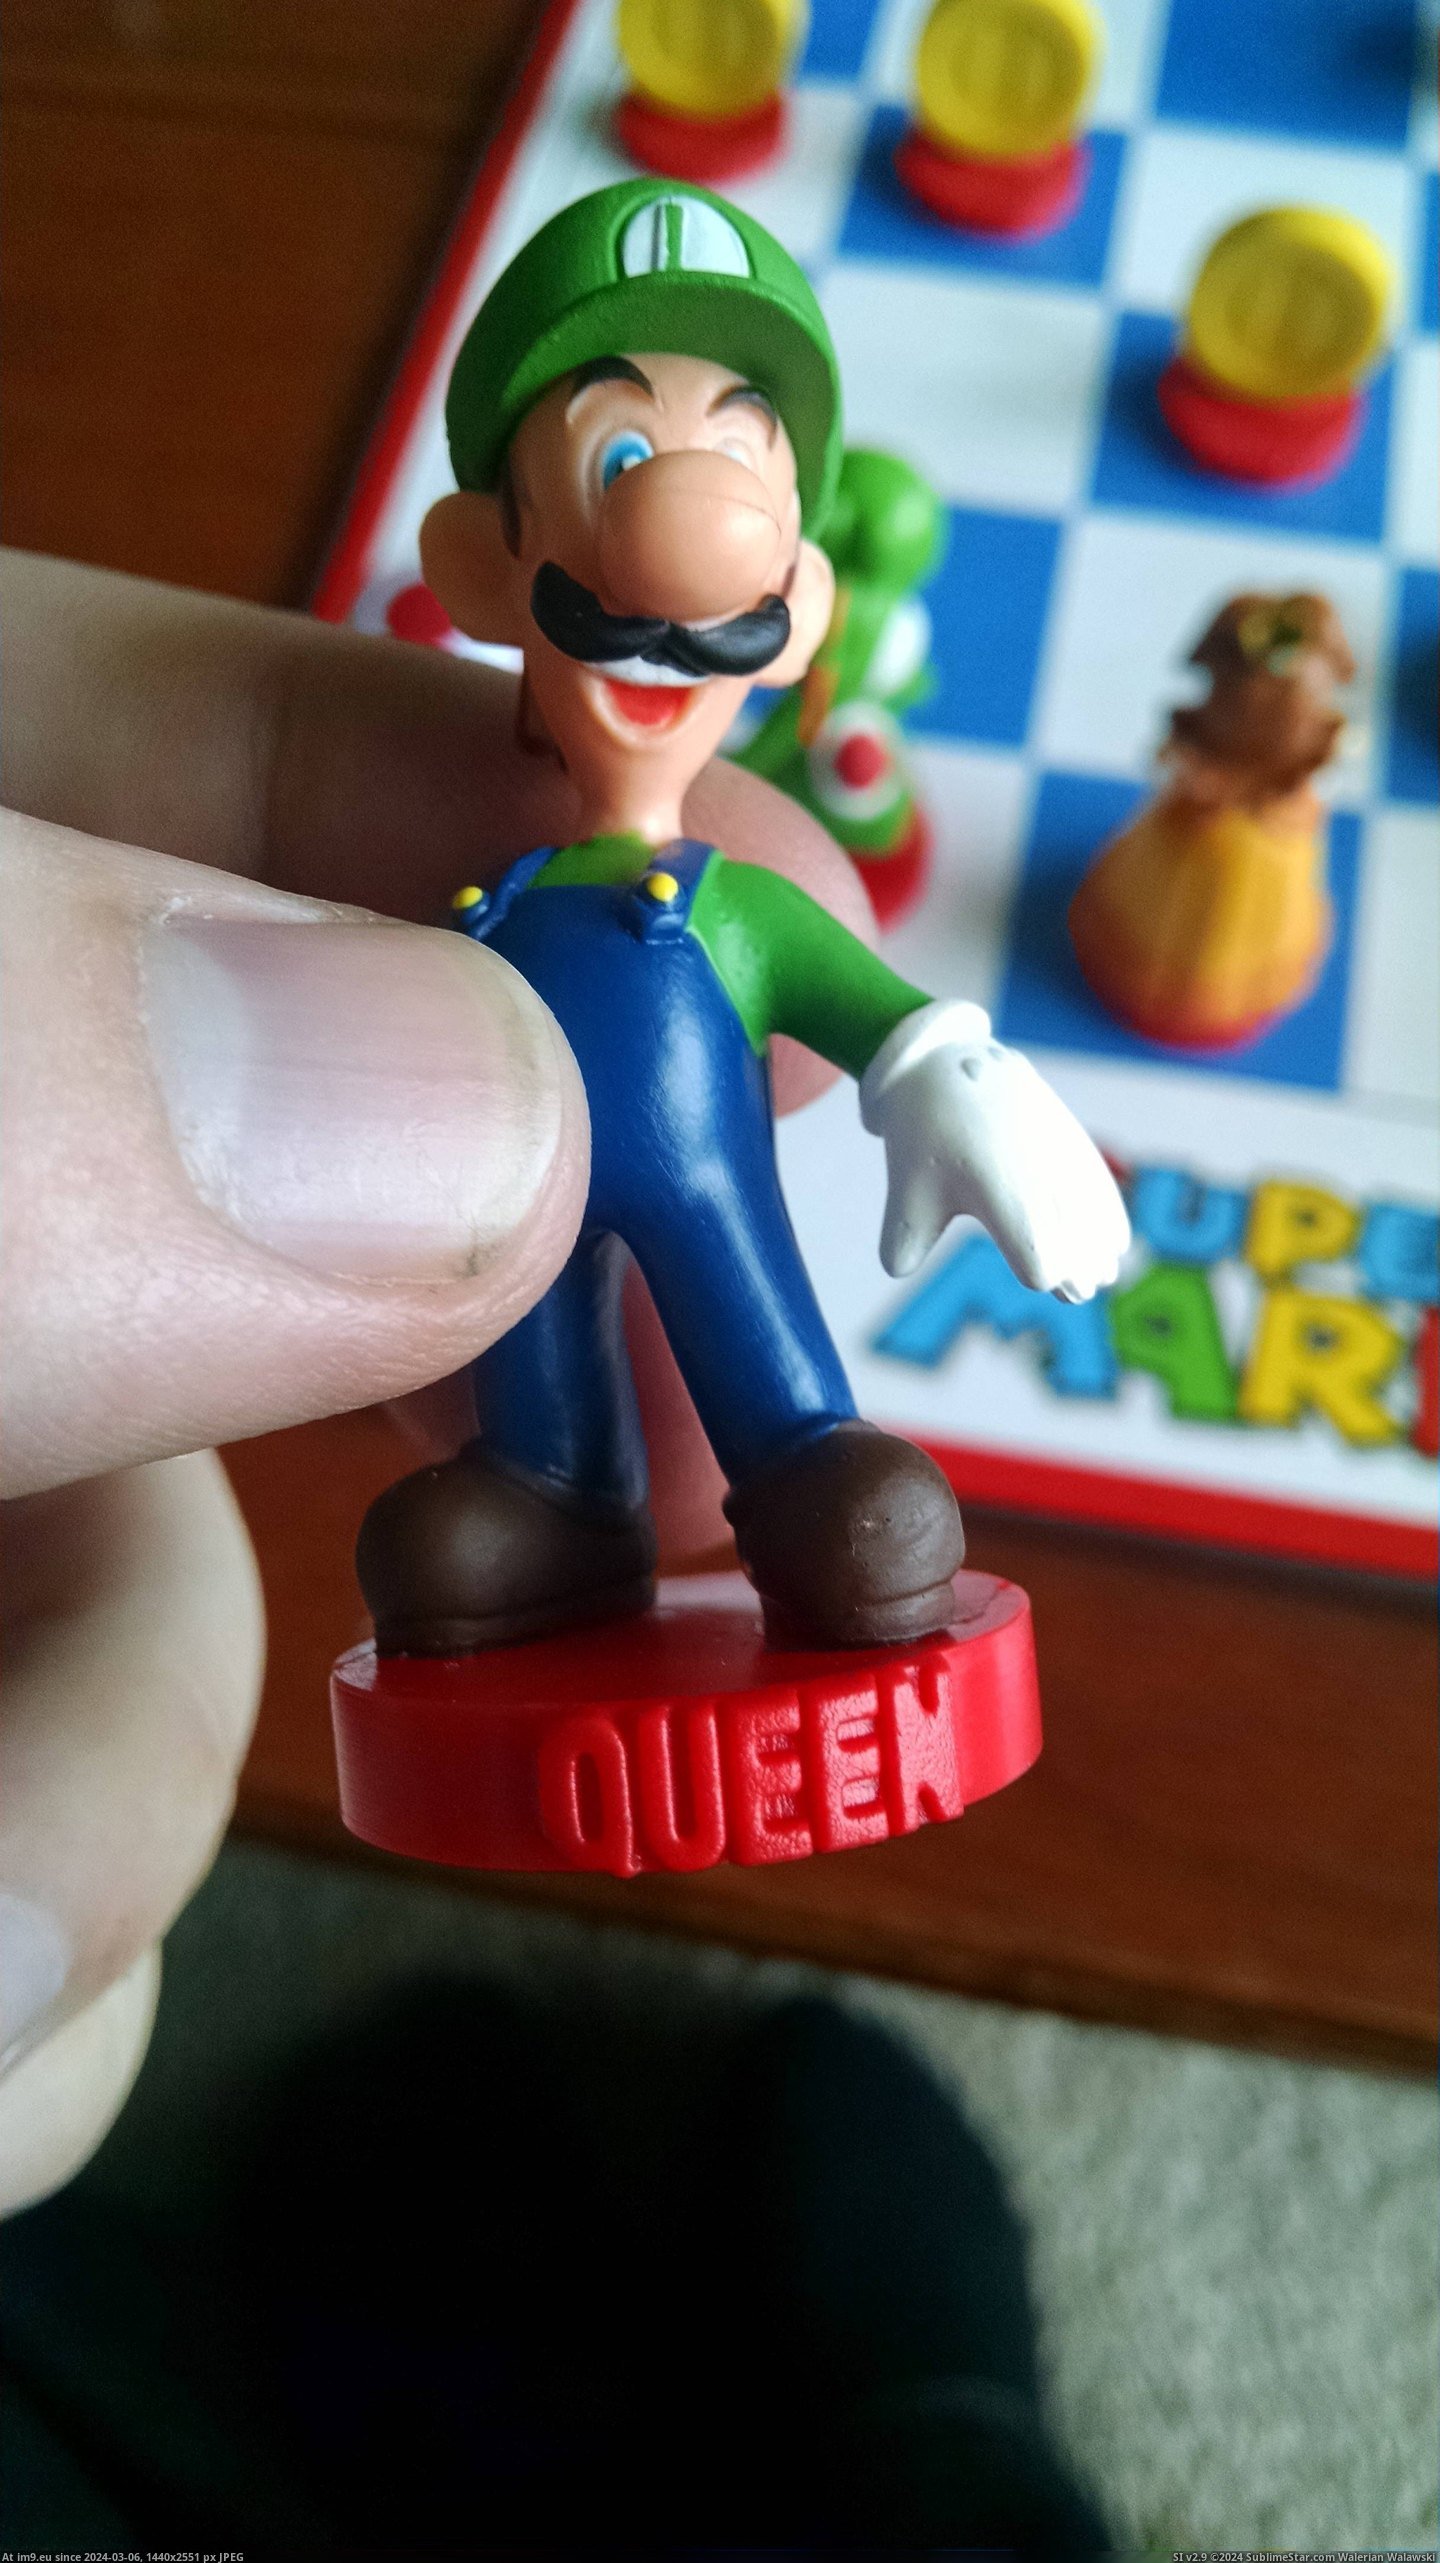 #Gaming #Sex #Poor #Chess #Luigi #Super #Mario [Gaming] Super Mario chess set. Poor Luigi... Pic. (Obraz z album My r/GAMING favs))